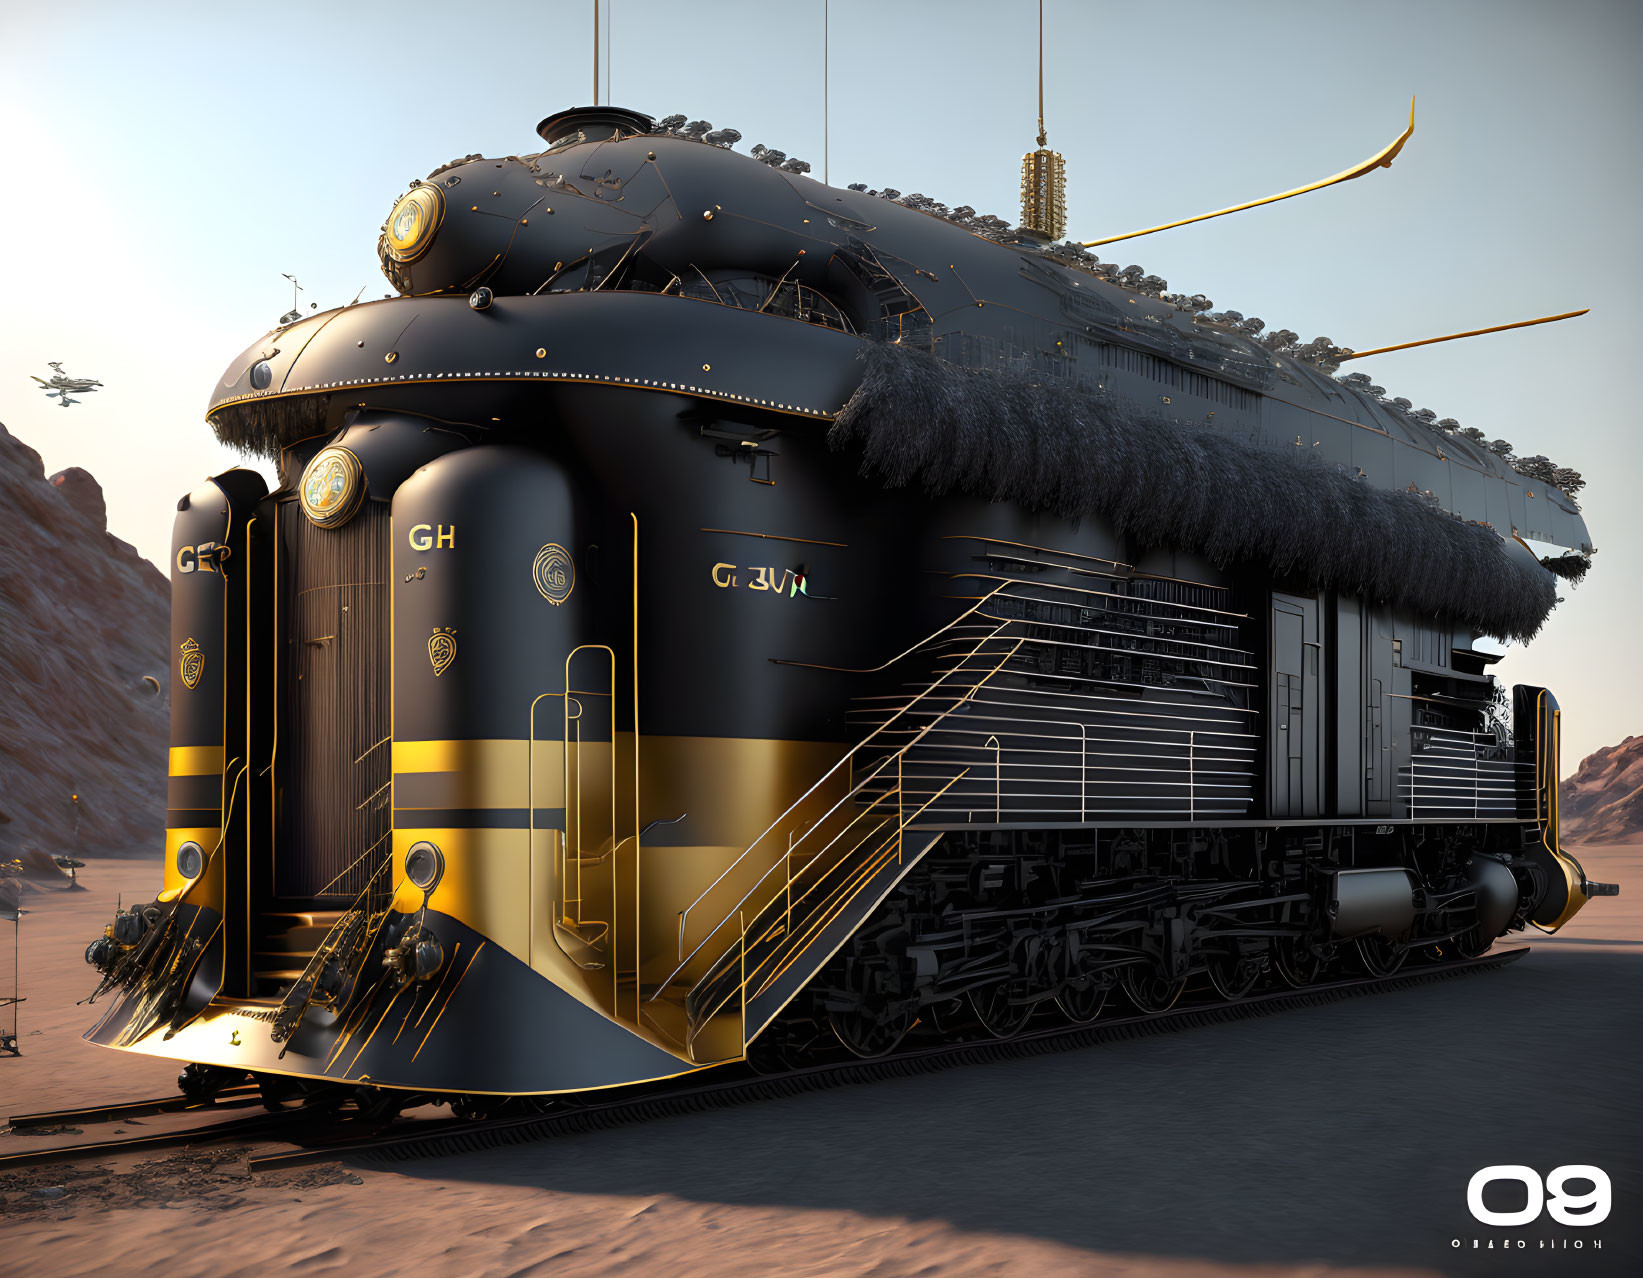 Sleek black and gold futuristic train in desert setting